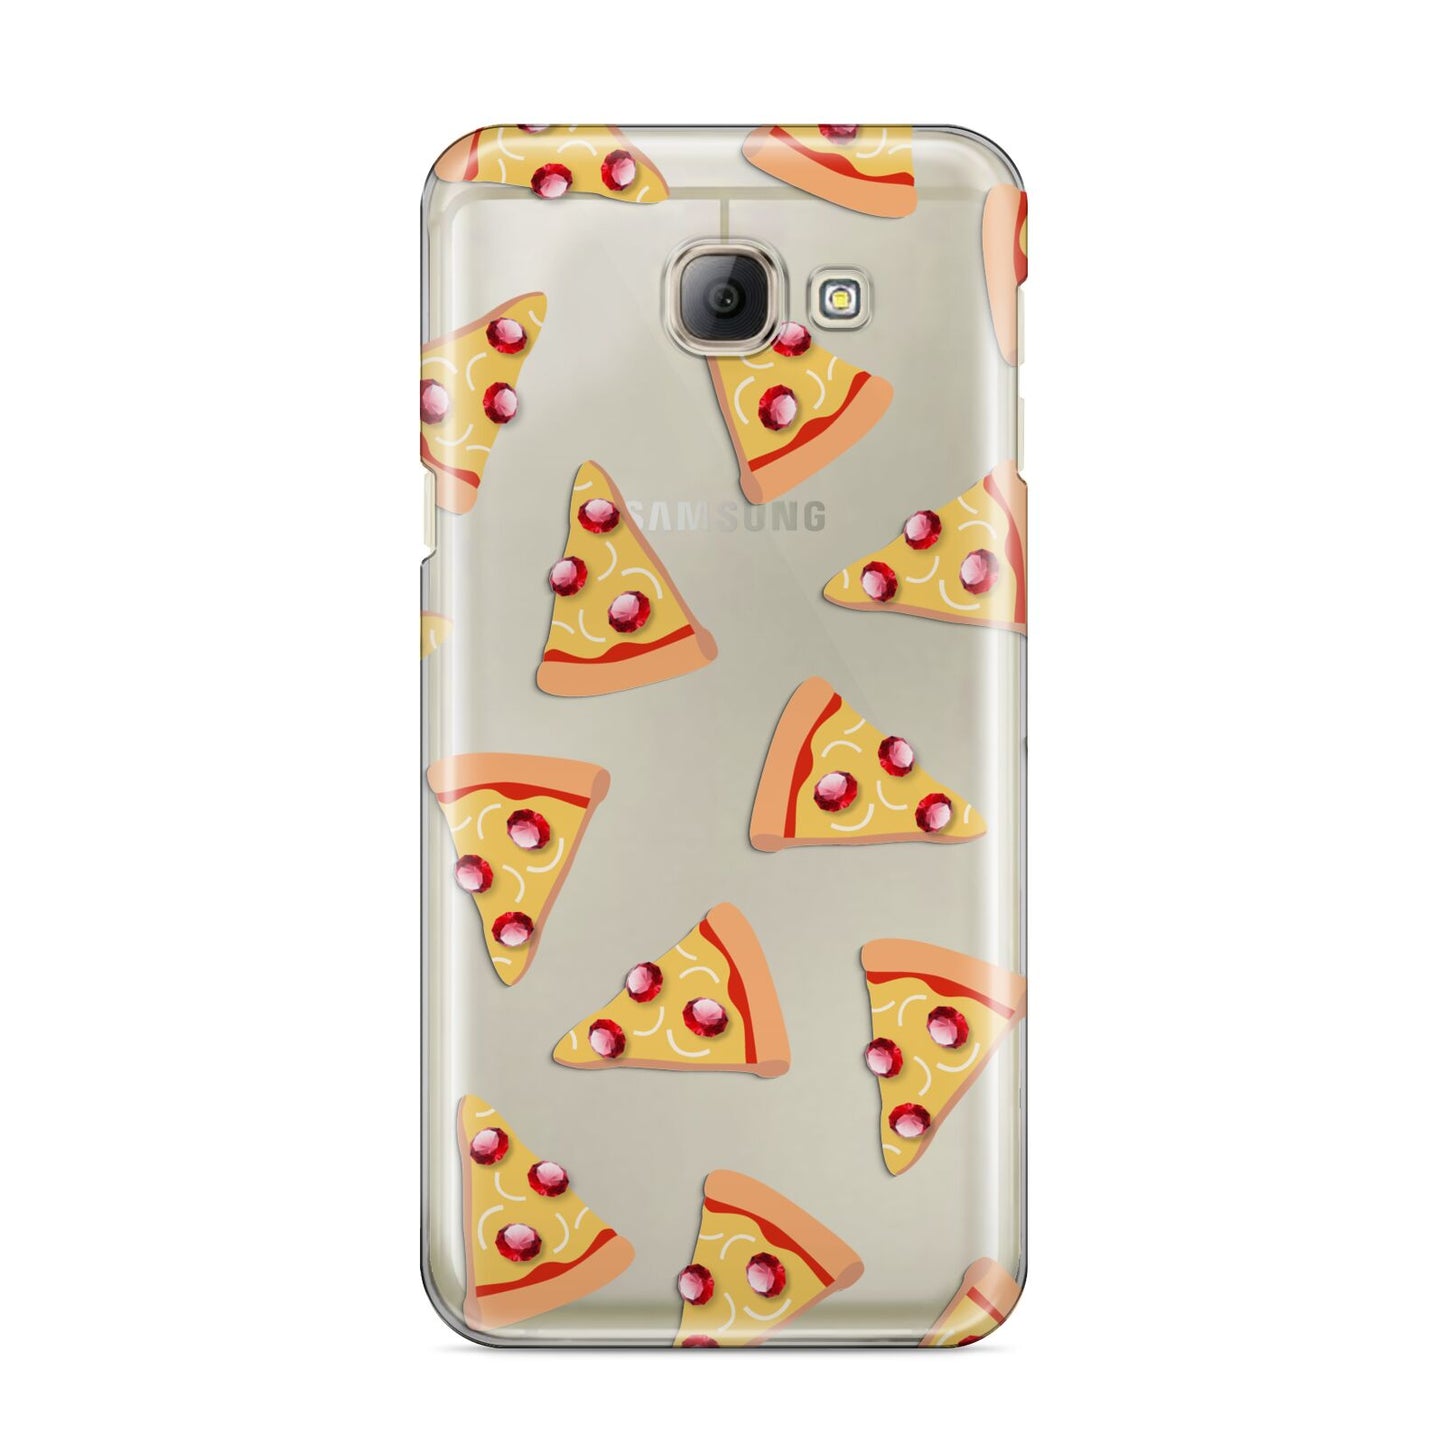 Rubies on Cartoon Pizza Slices Samsung Galaxy A8 2016 Case